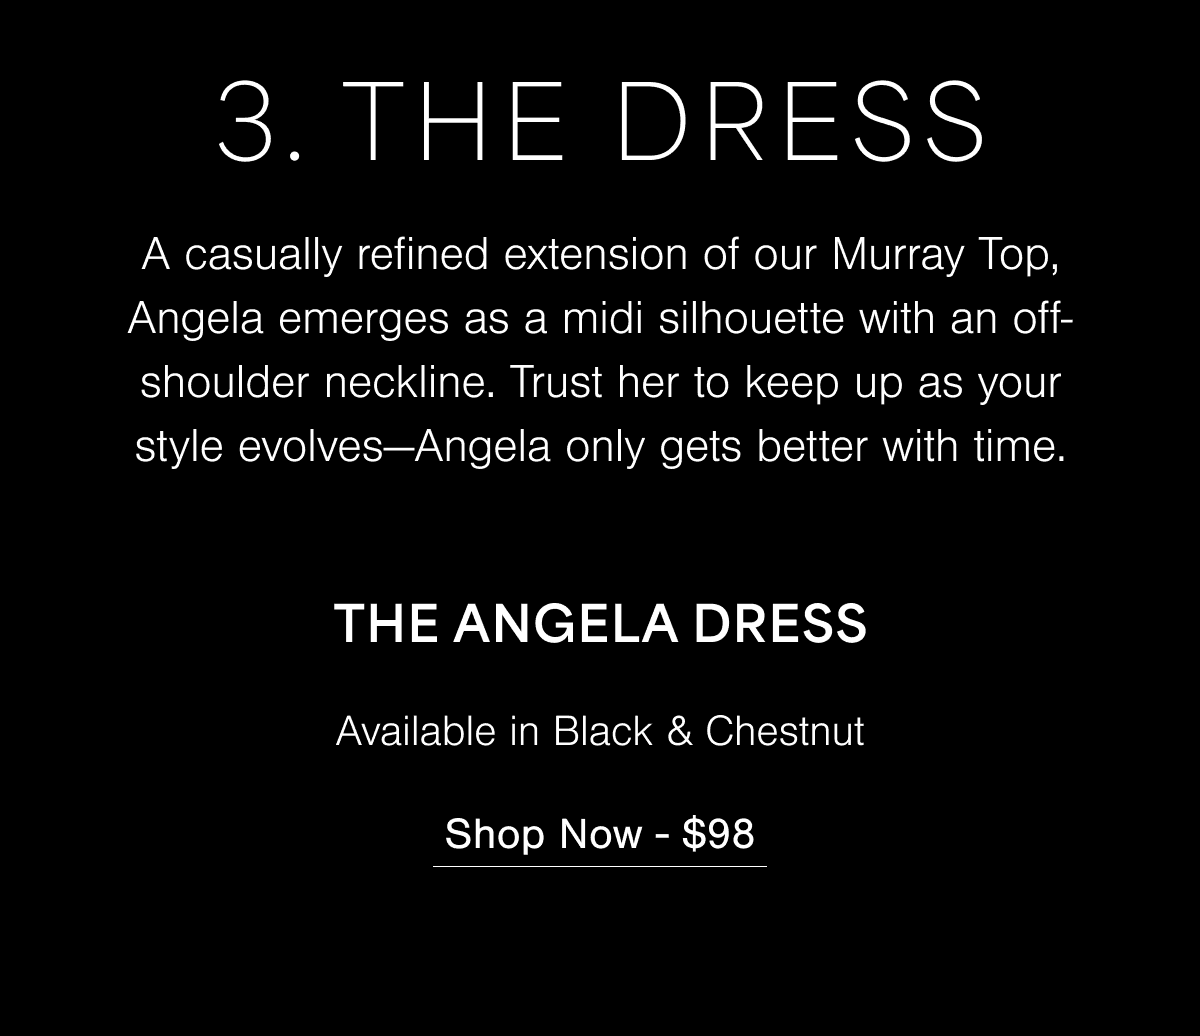 The Angela Dress